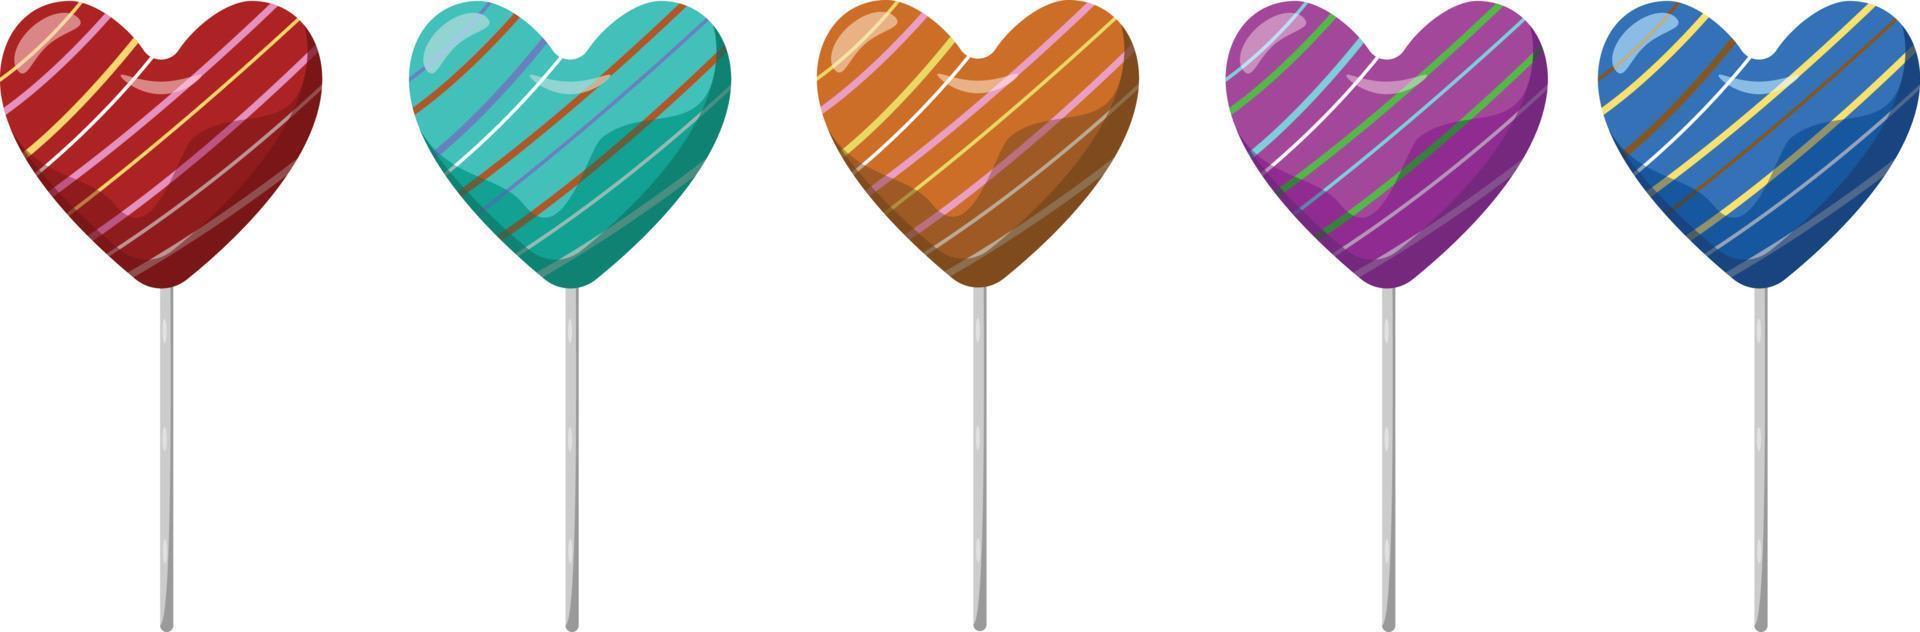 Heart Shape Striped Lolipop Love Candy Illustration vector